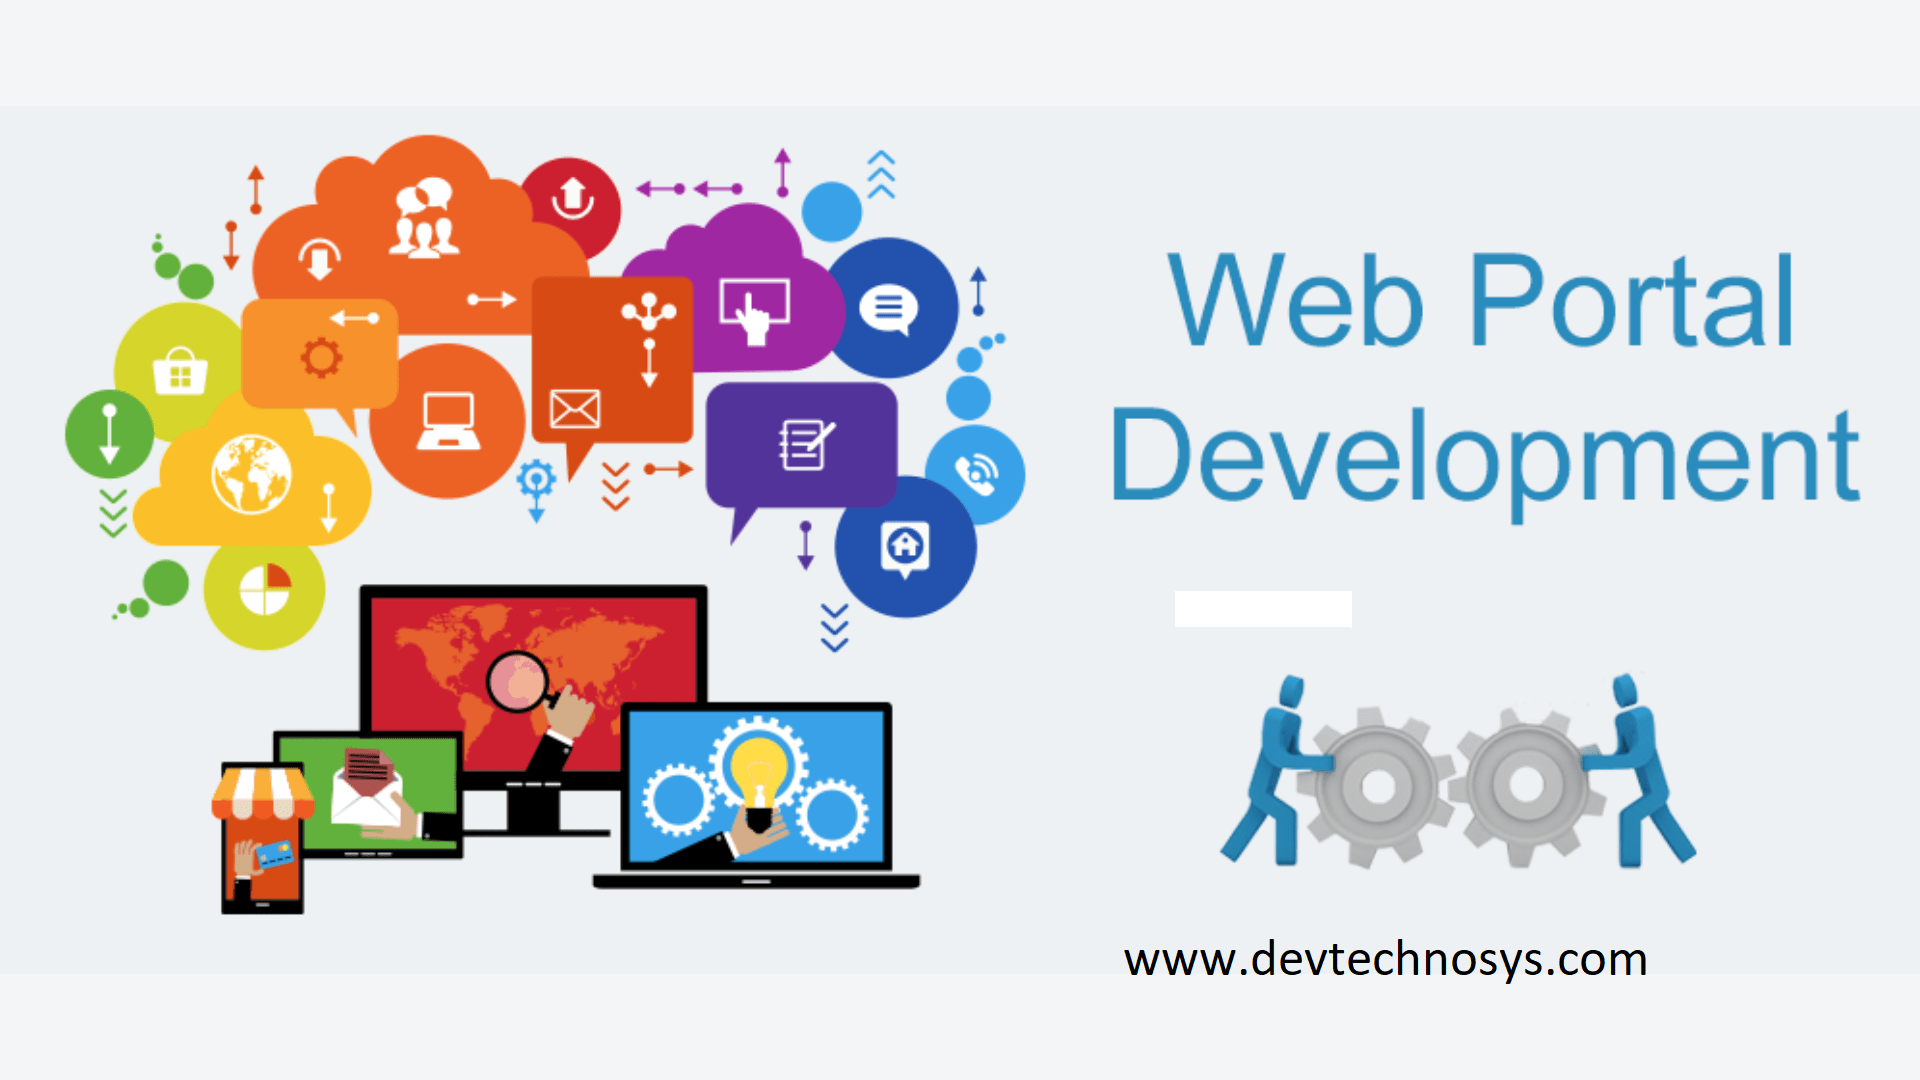 Web Portal Development Company